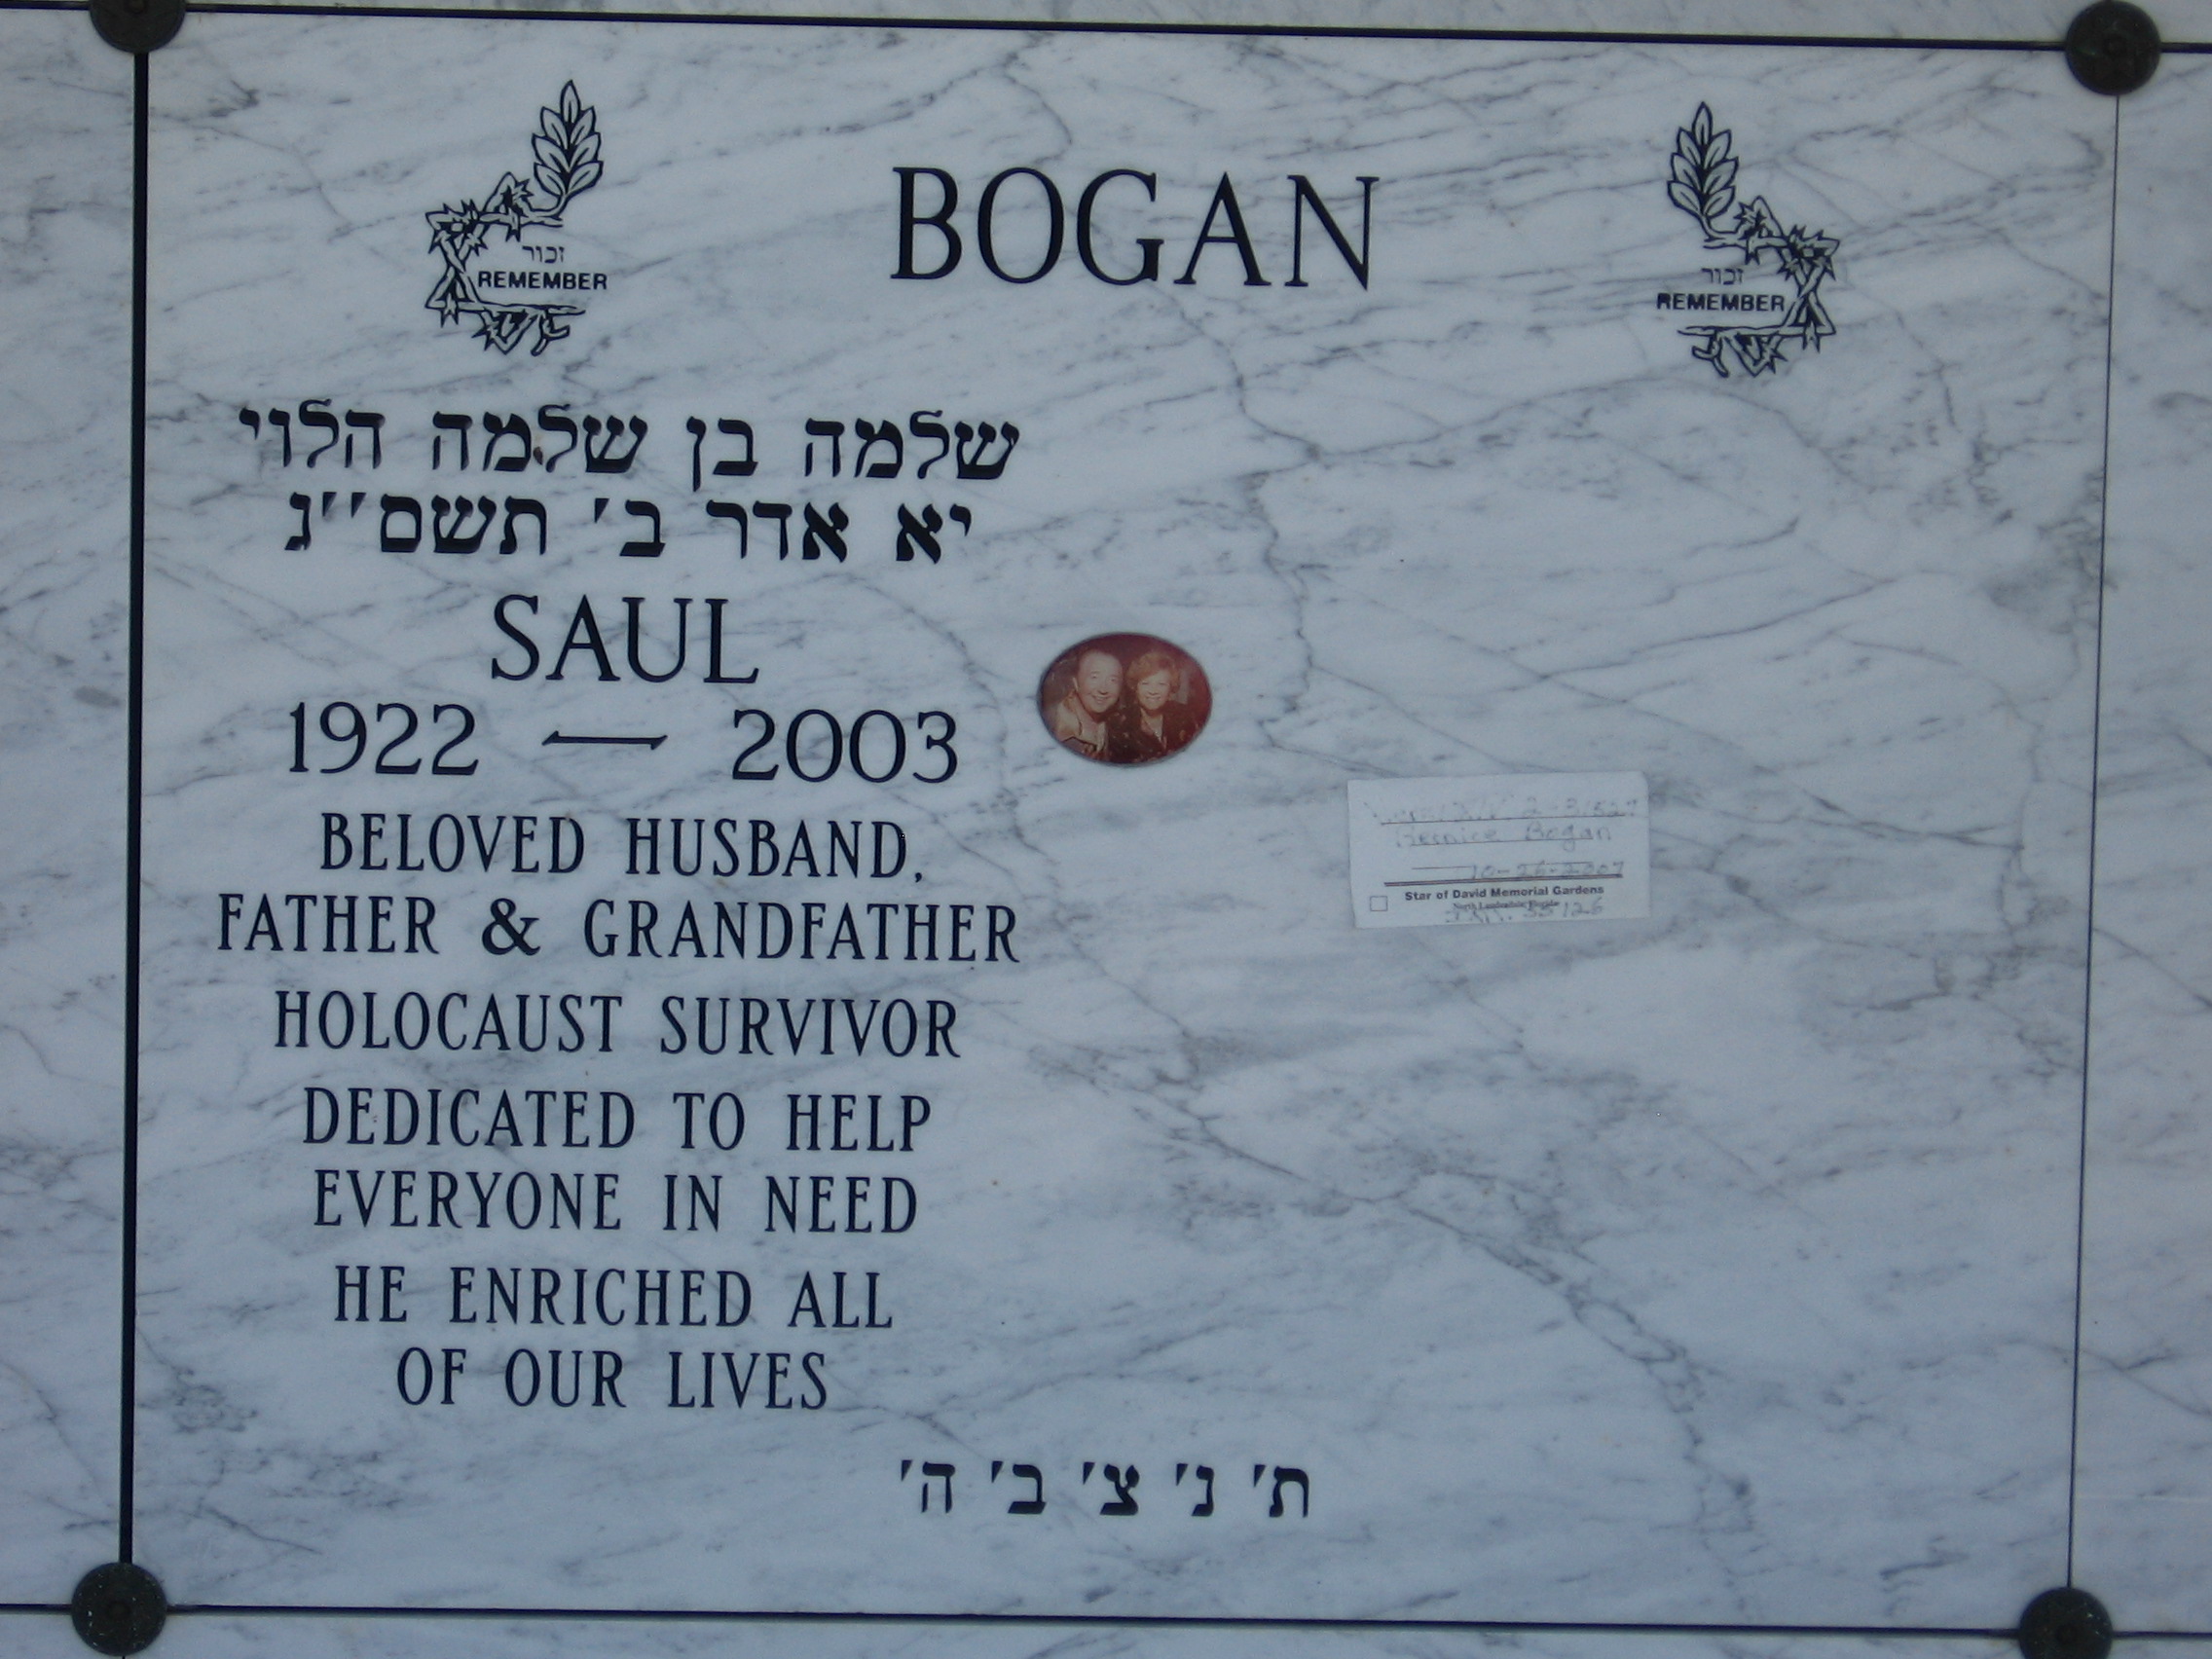 Saul Bogan